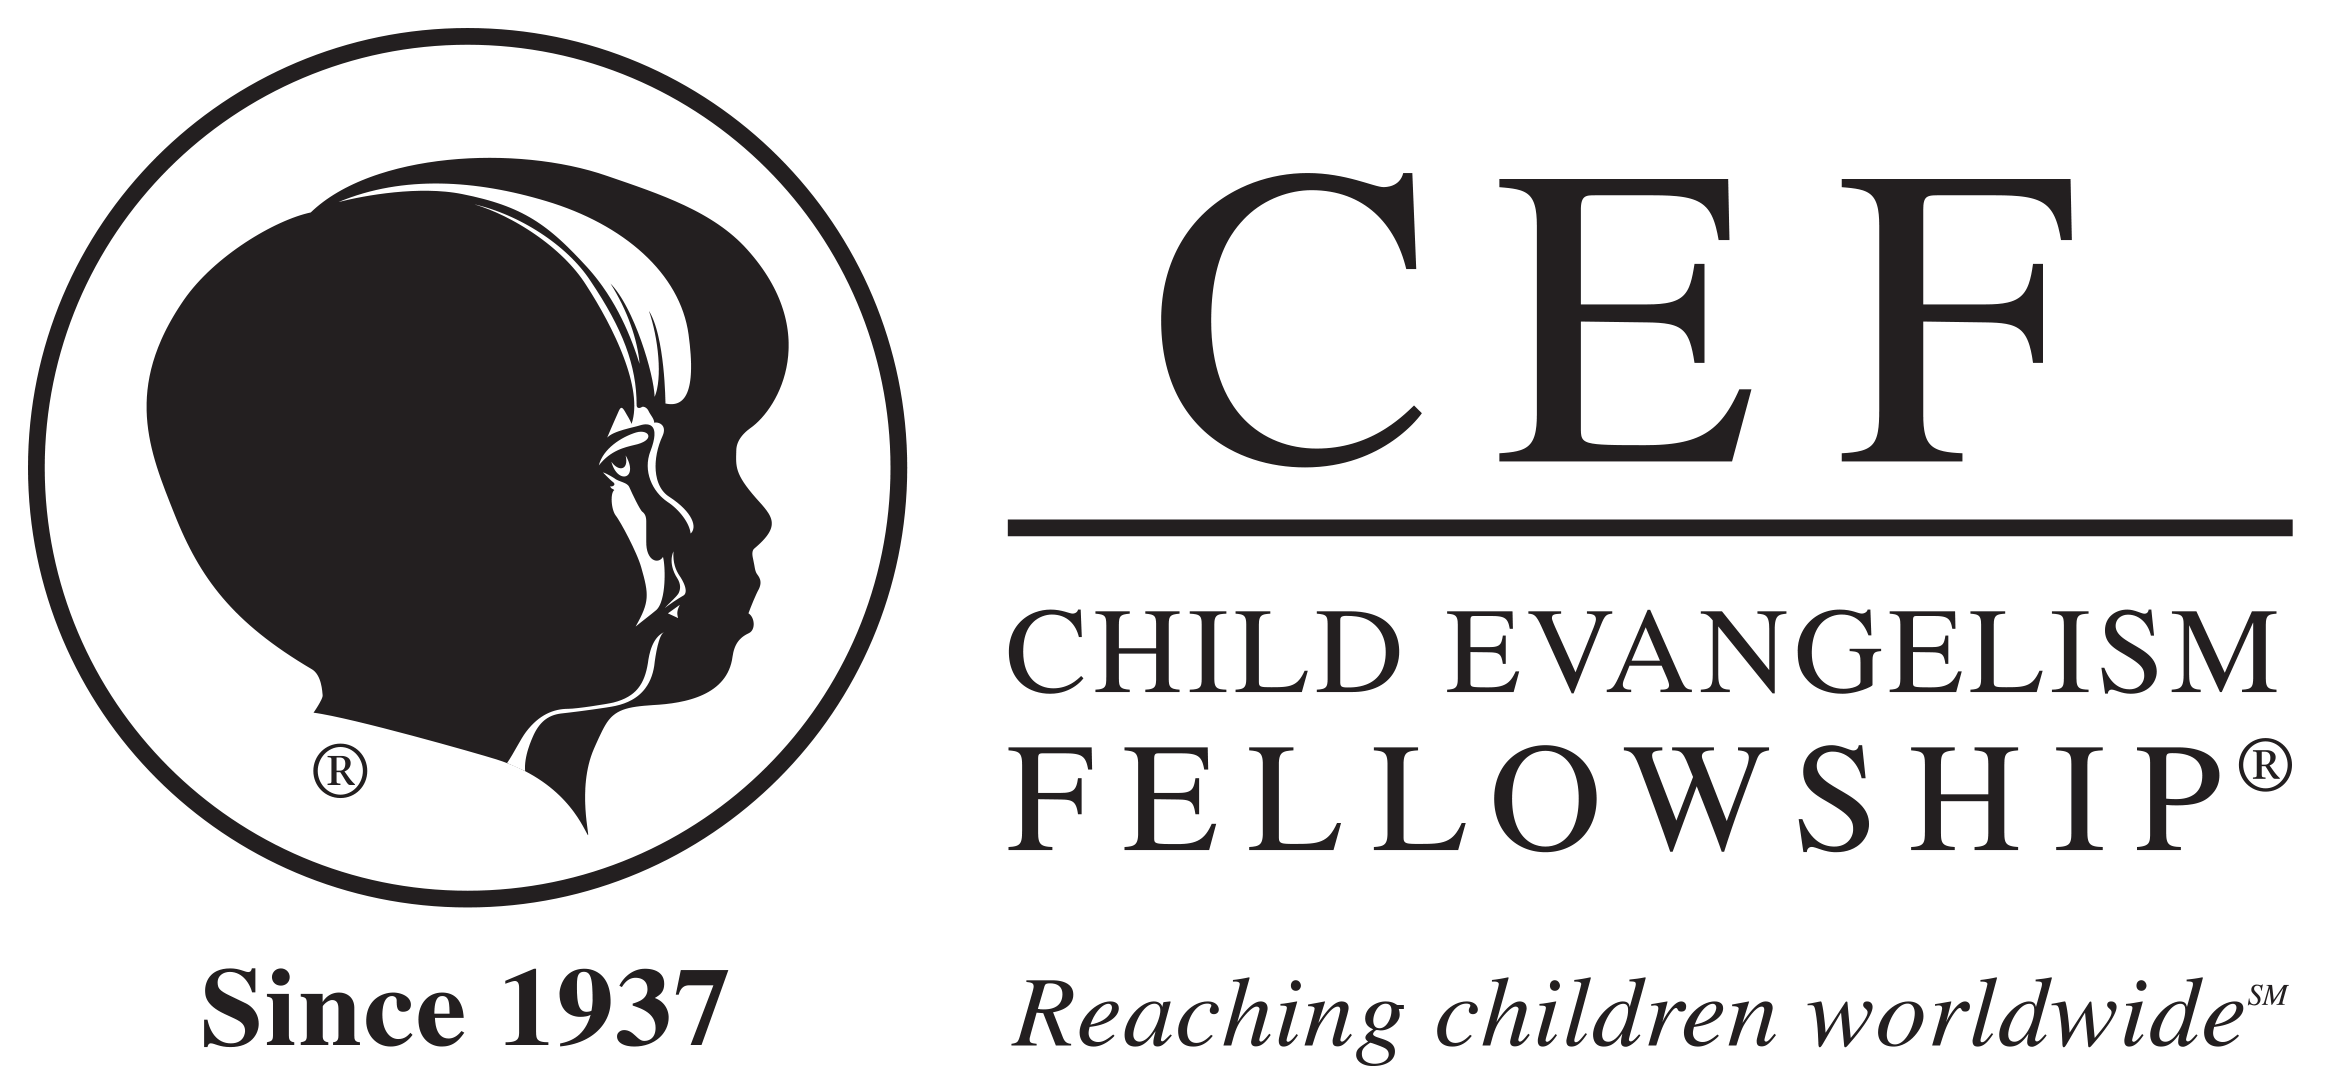 Child Evangelism Fellowship logo